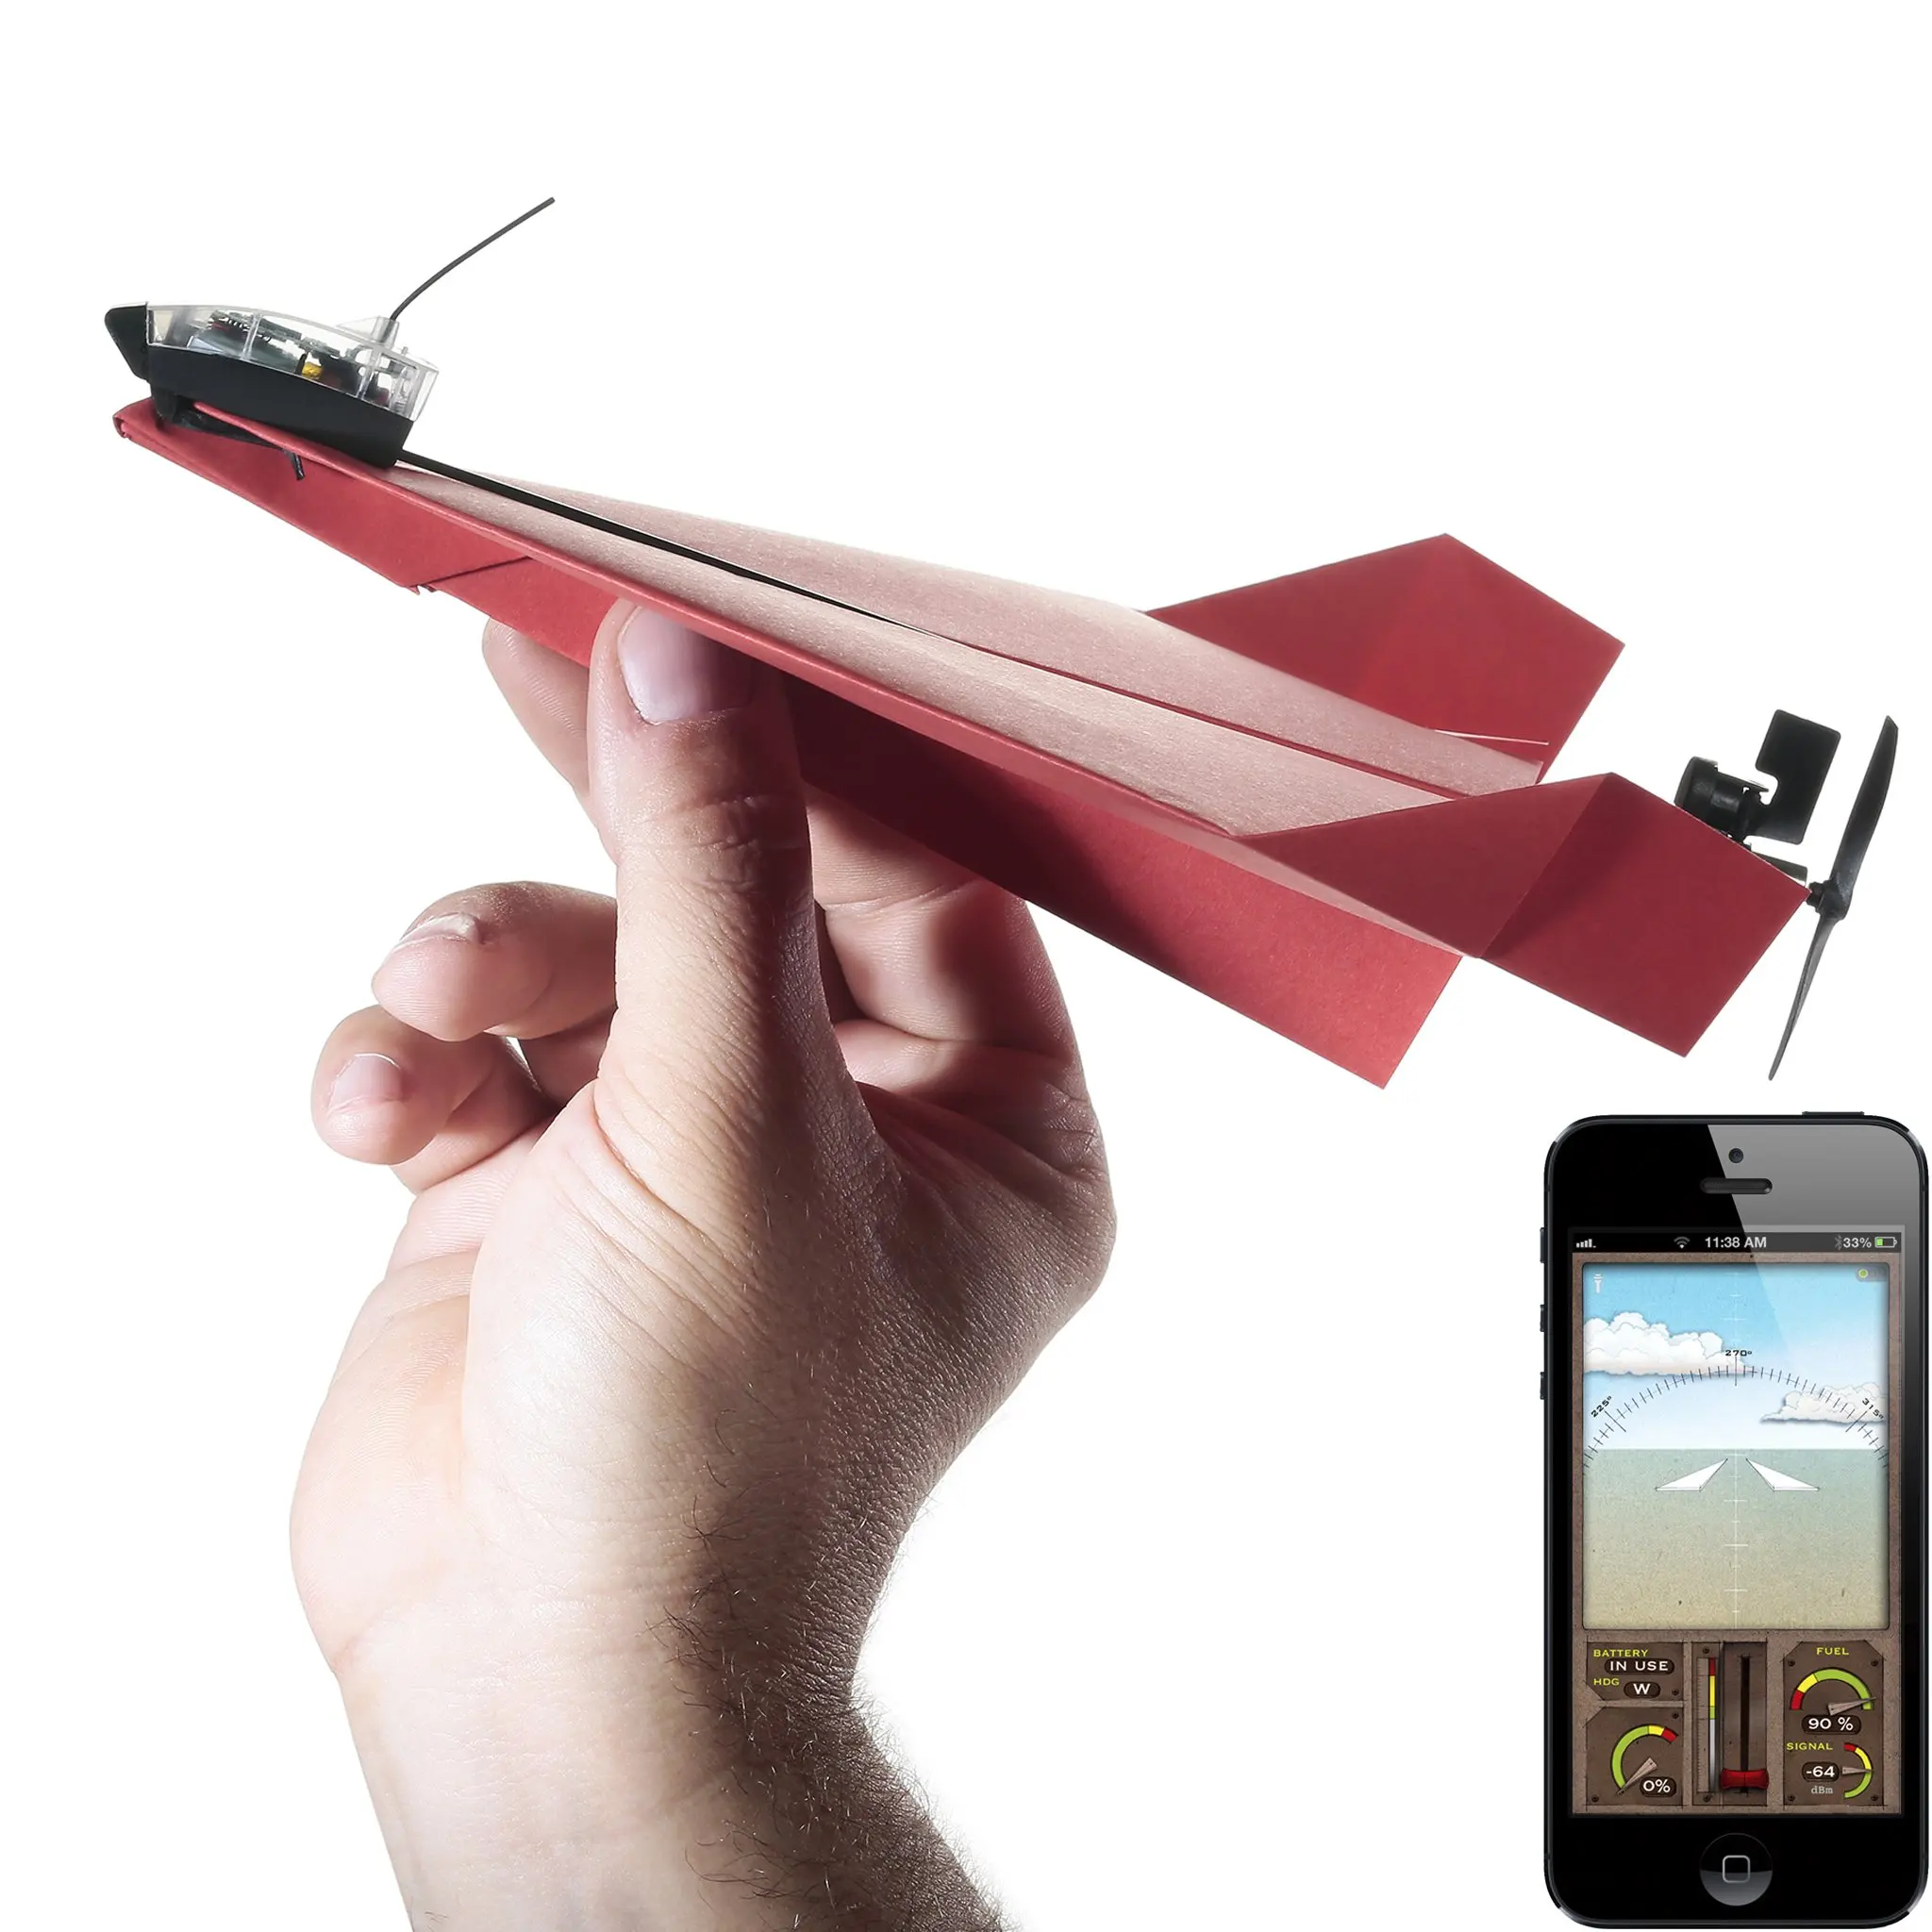 controlplane app replacement